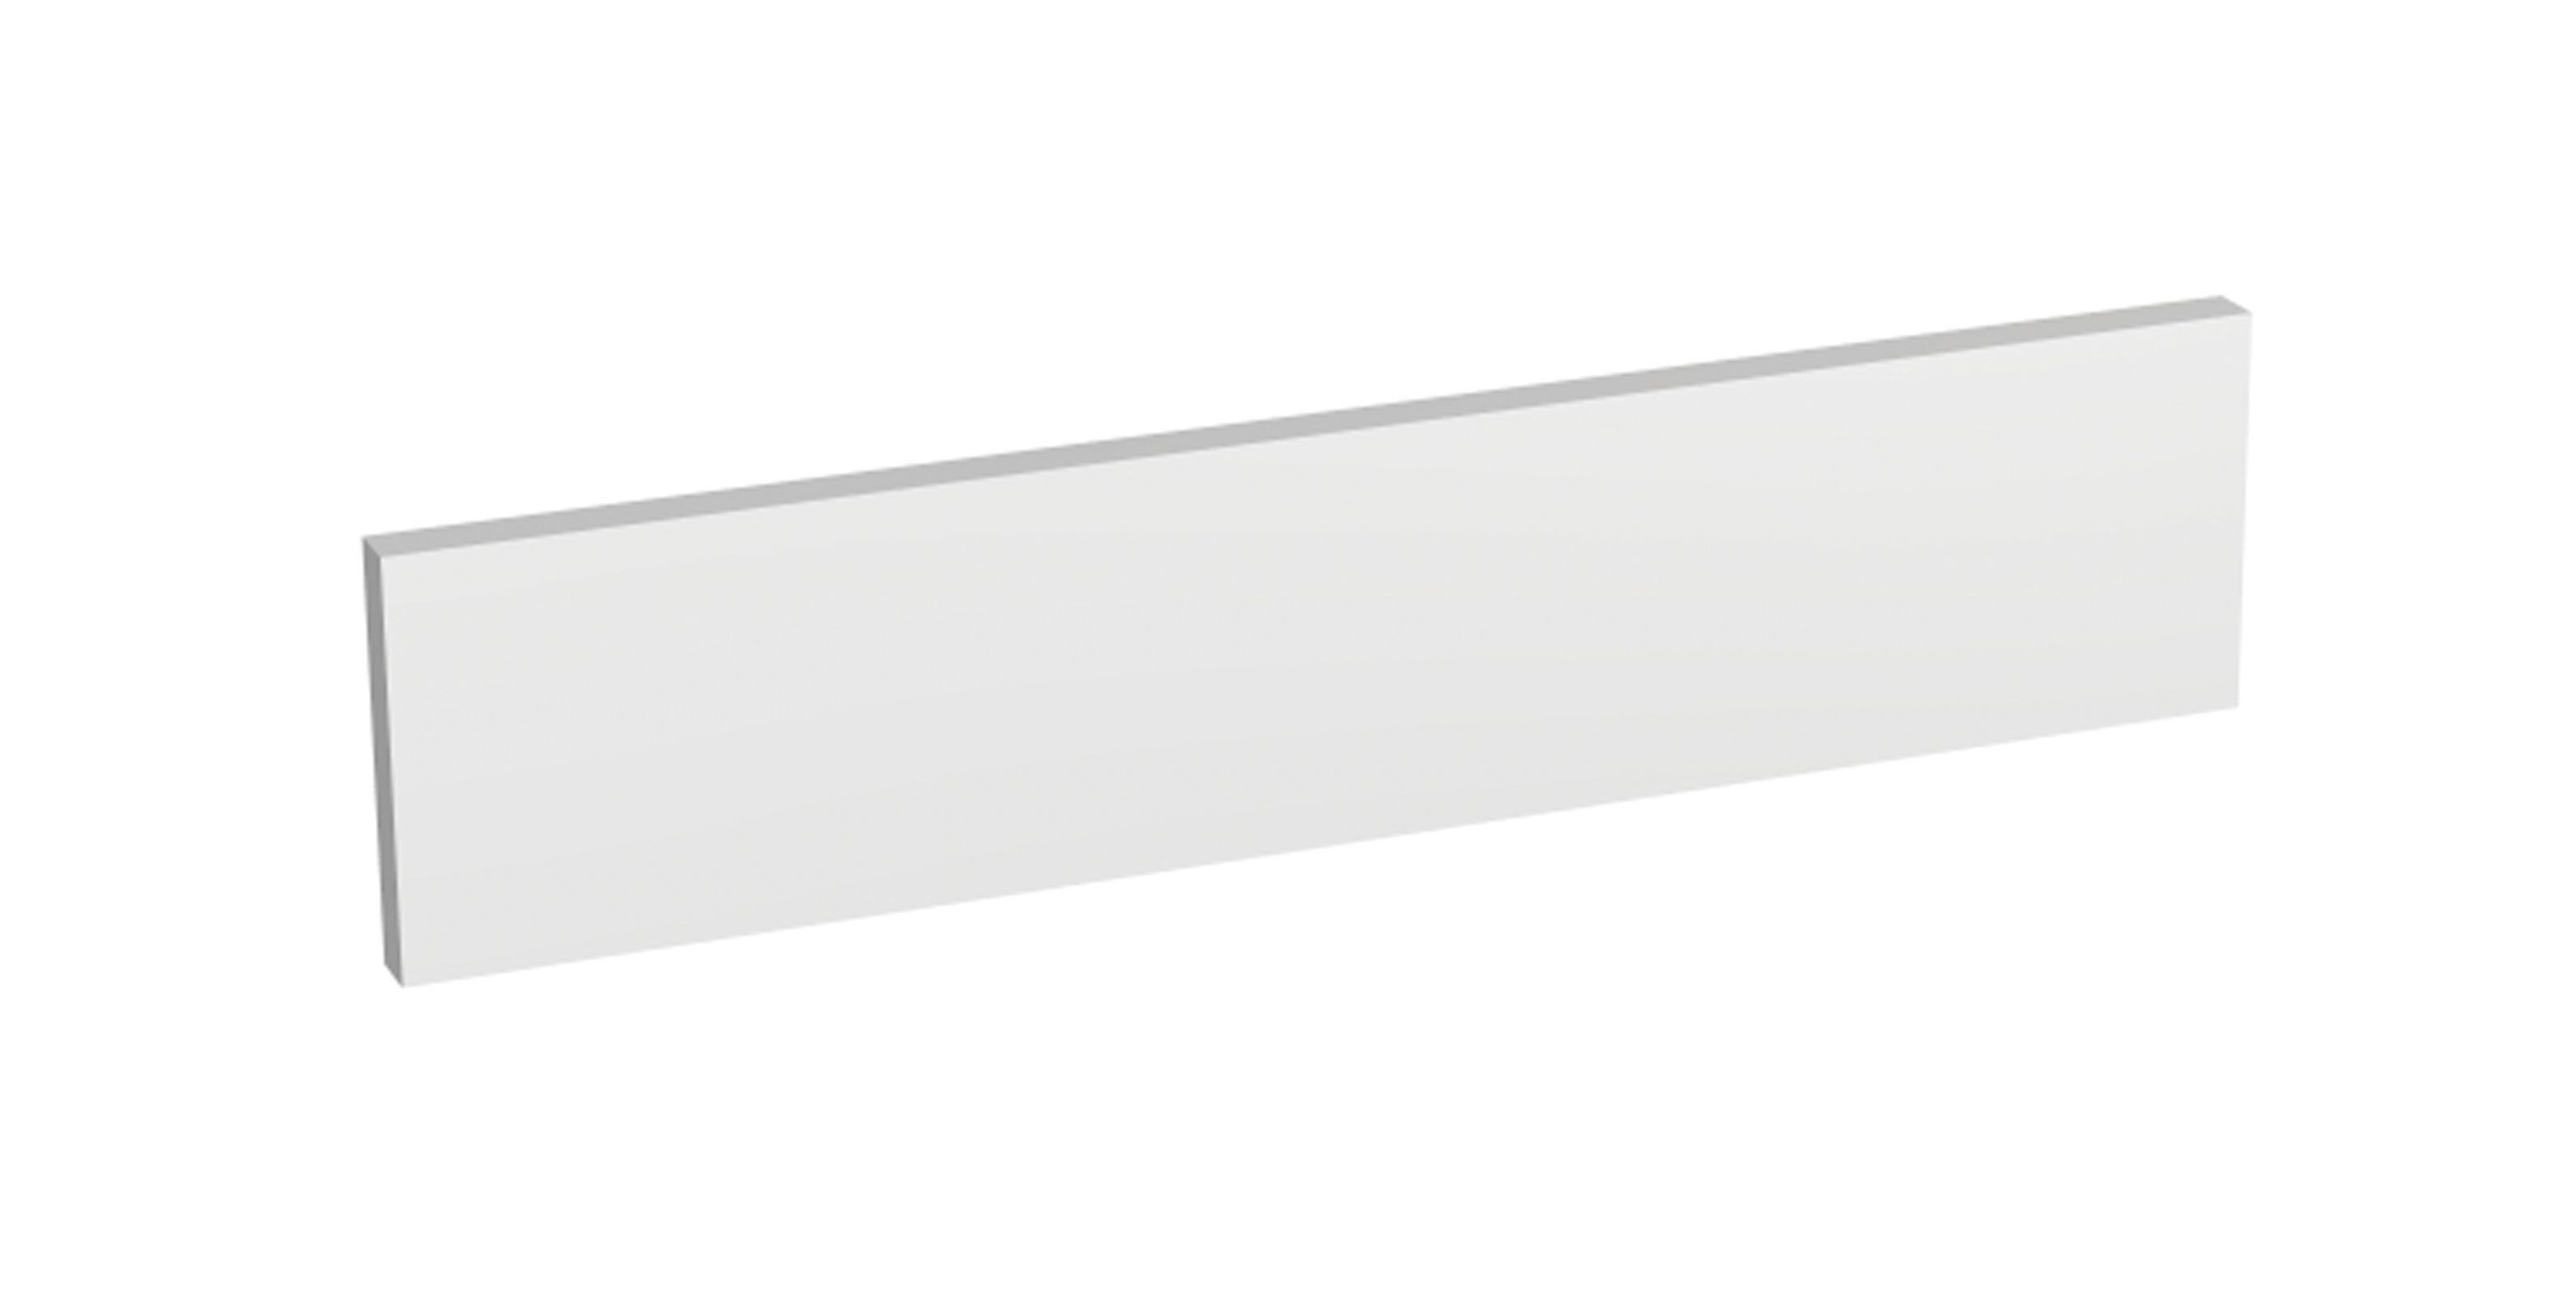 Image of Wickes Madison White Gloss Handleless Appliance Door - 600 x 131mm